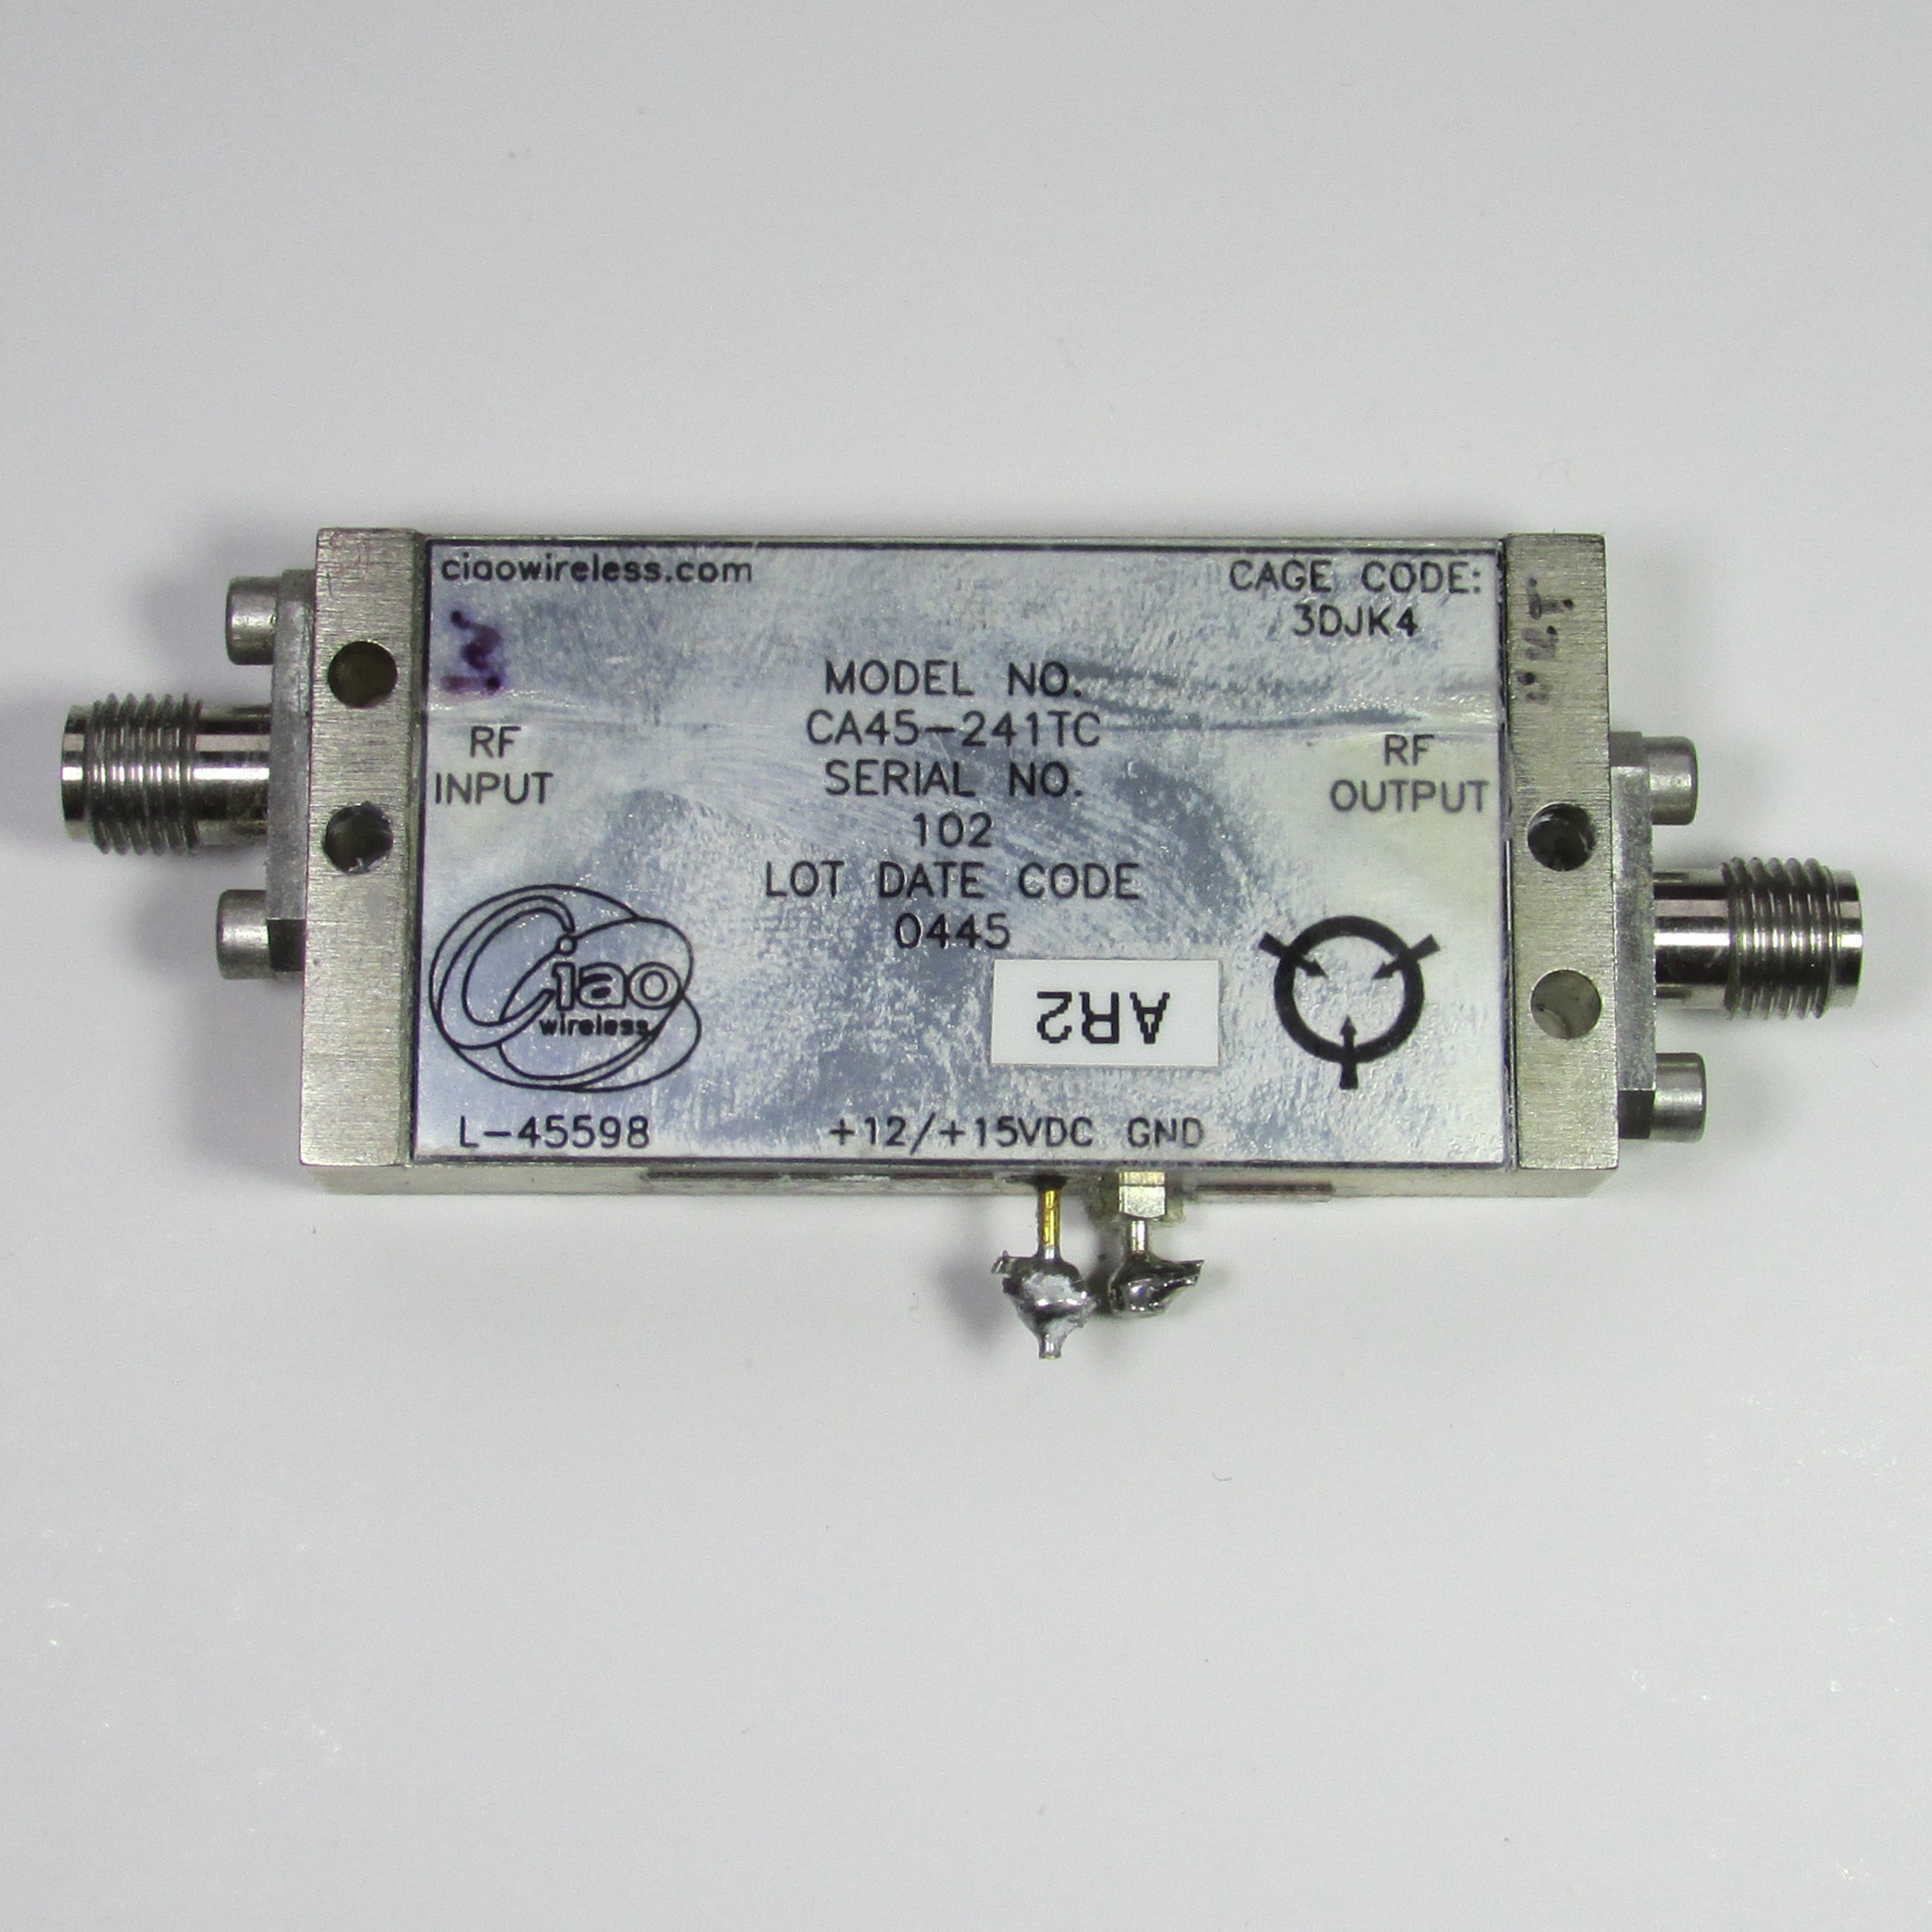 United States ciaowireless CA45-241TC 3.5-7GHz 25dB 23dBm microwave amplifier